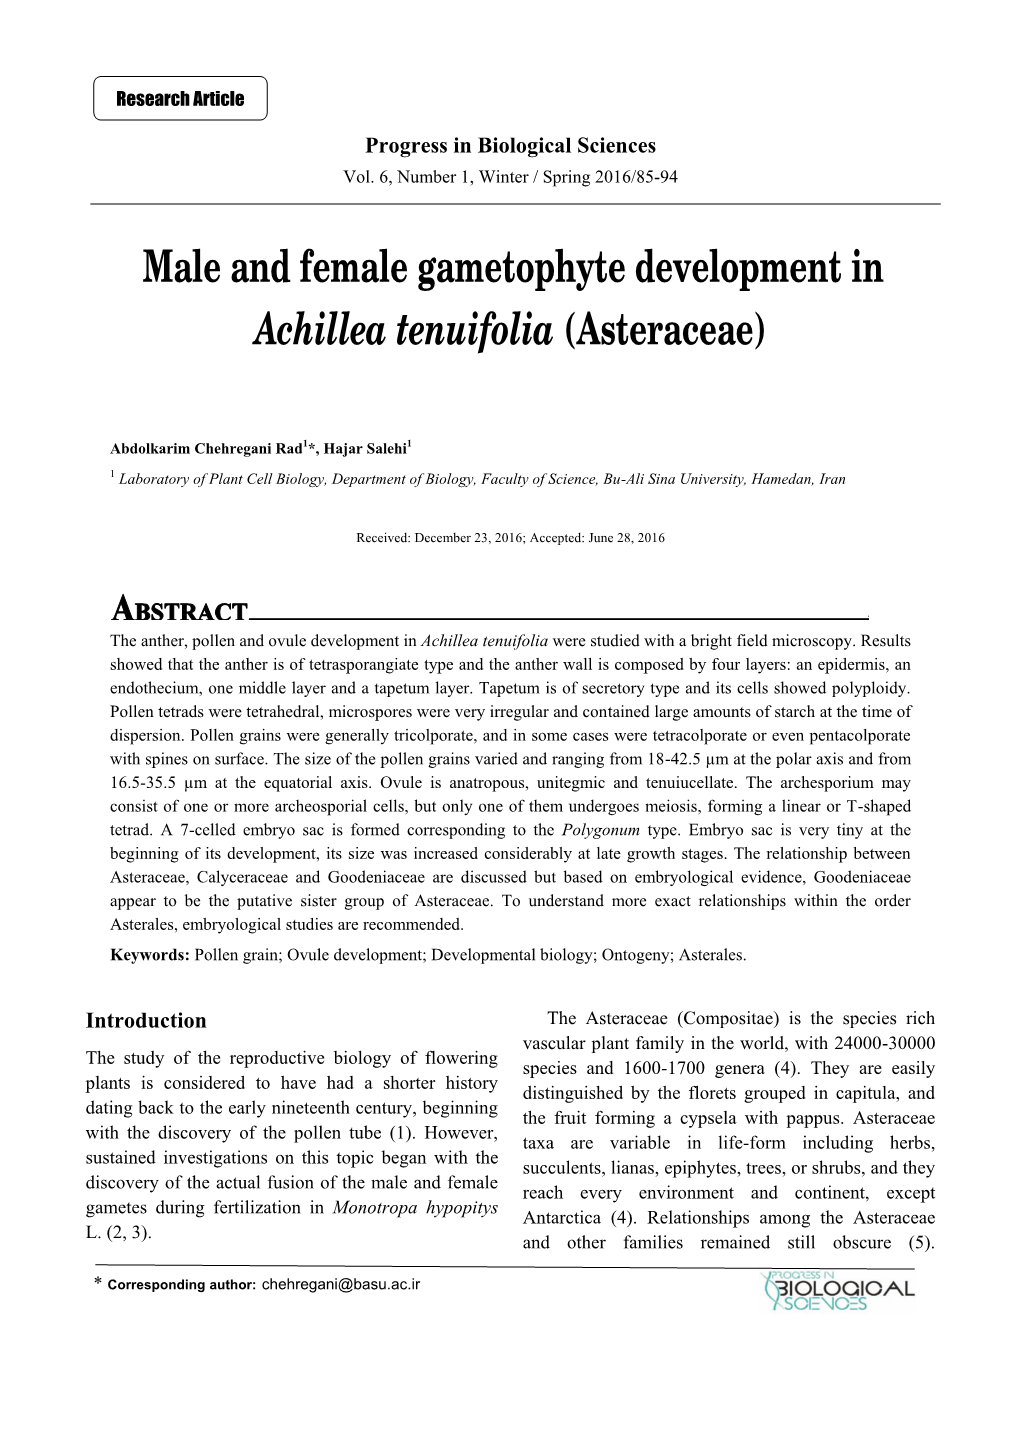 Male and Female Gametophyte Development in Achillea Tenuifolia (Asteraceae)